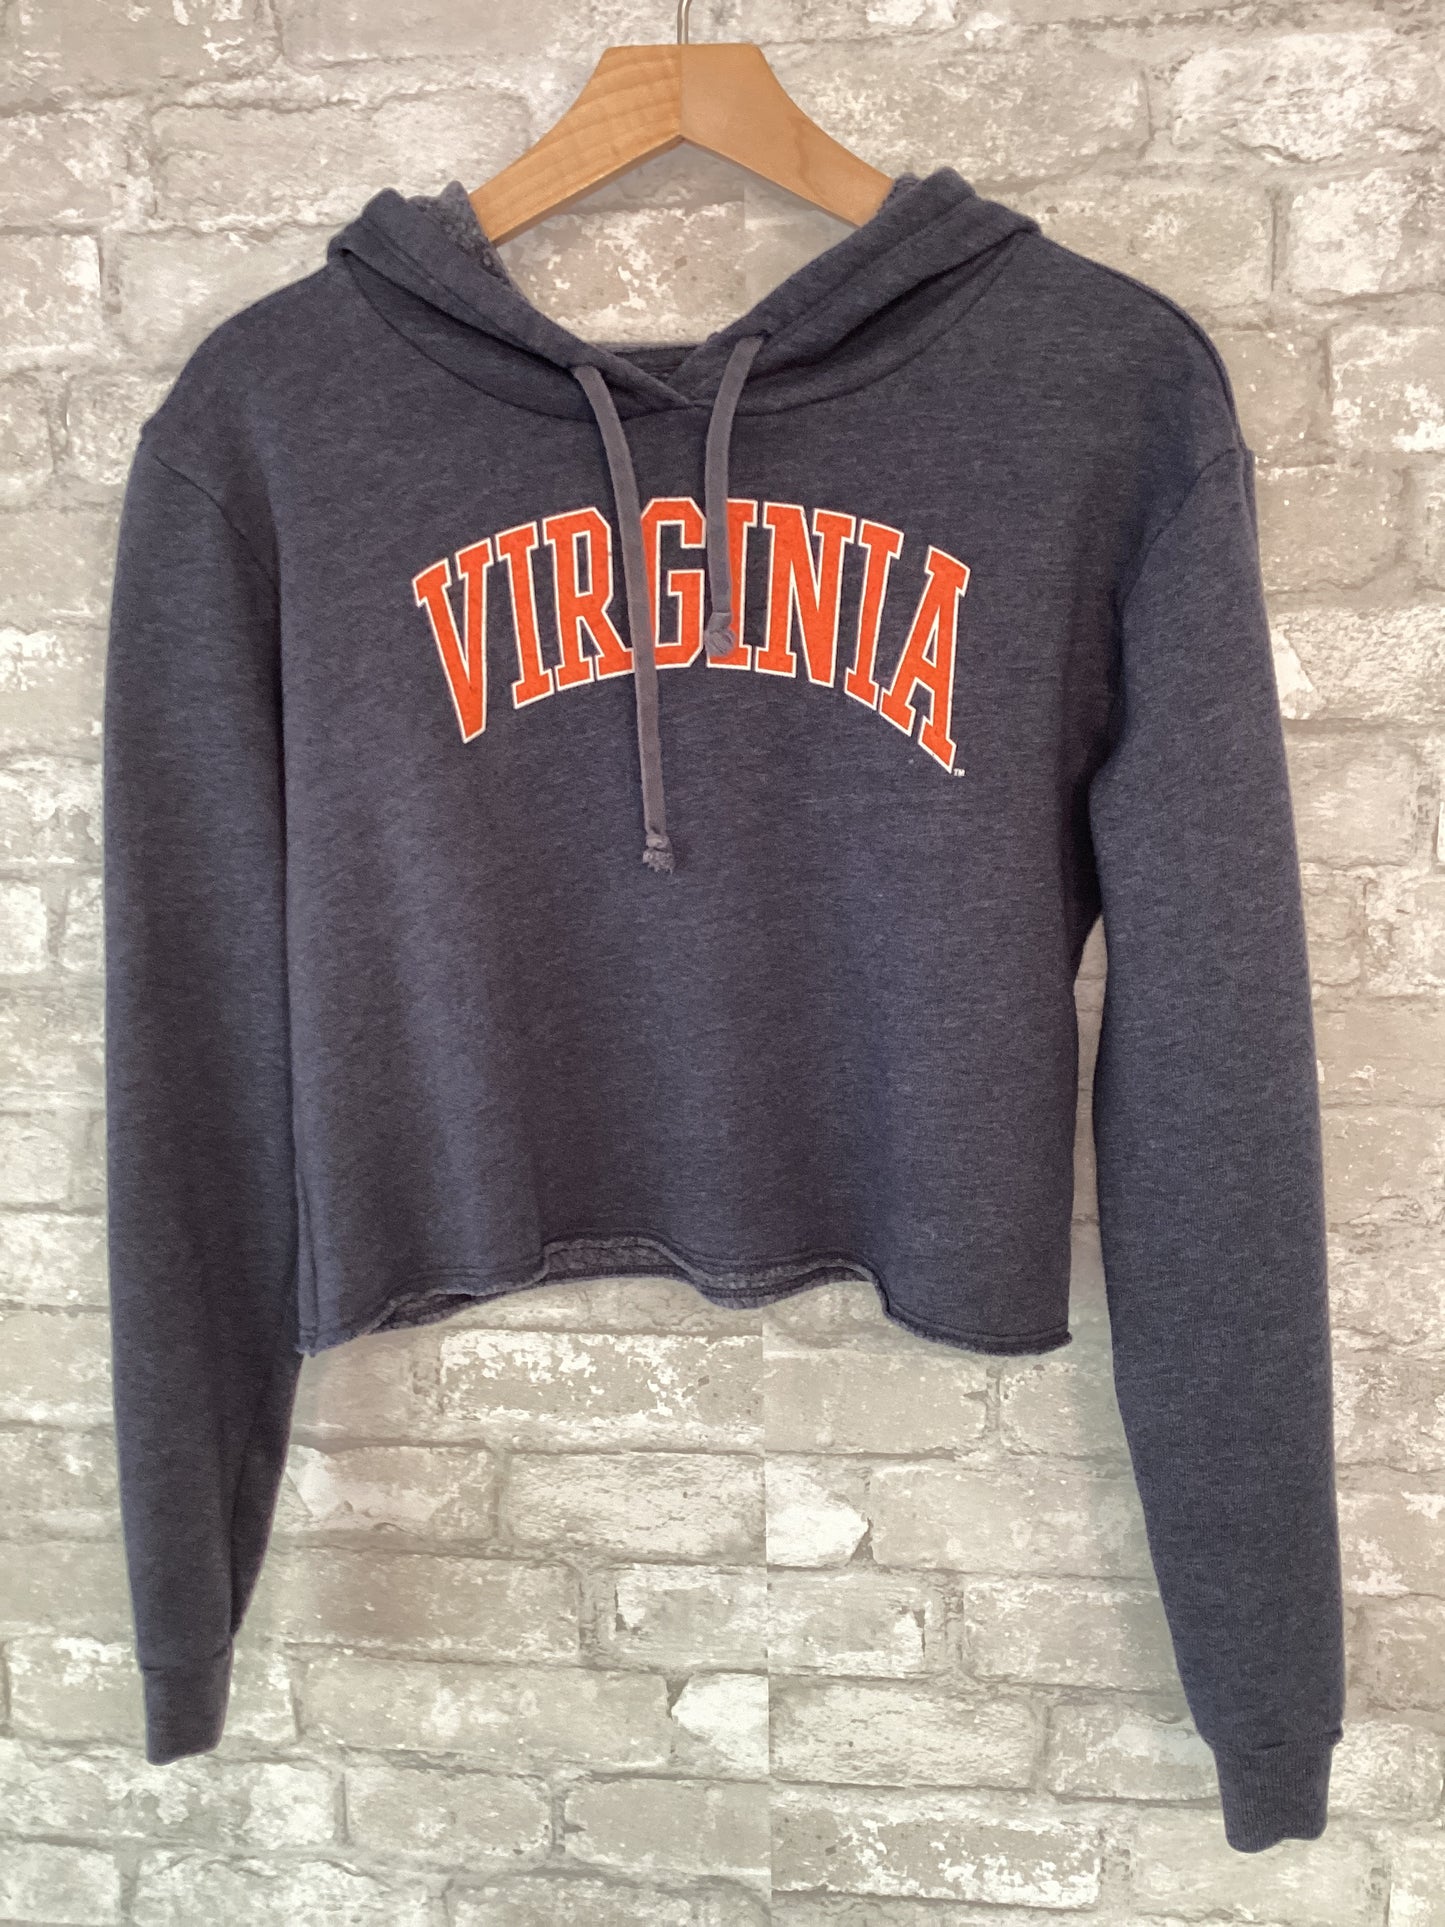 Blue 84 Size S navy/orange Virginia Sweatshirt